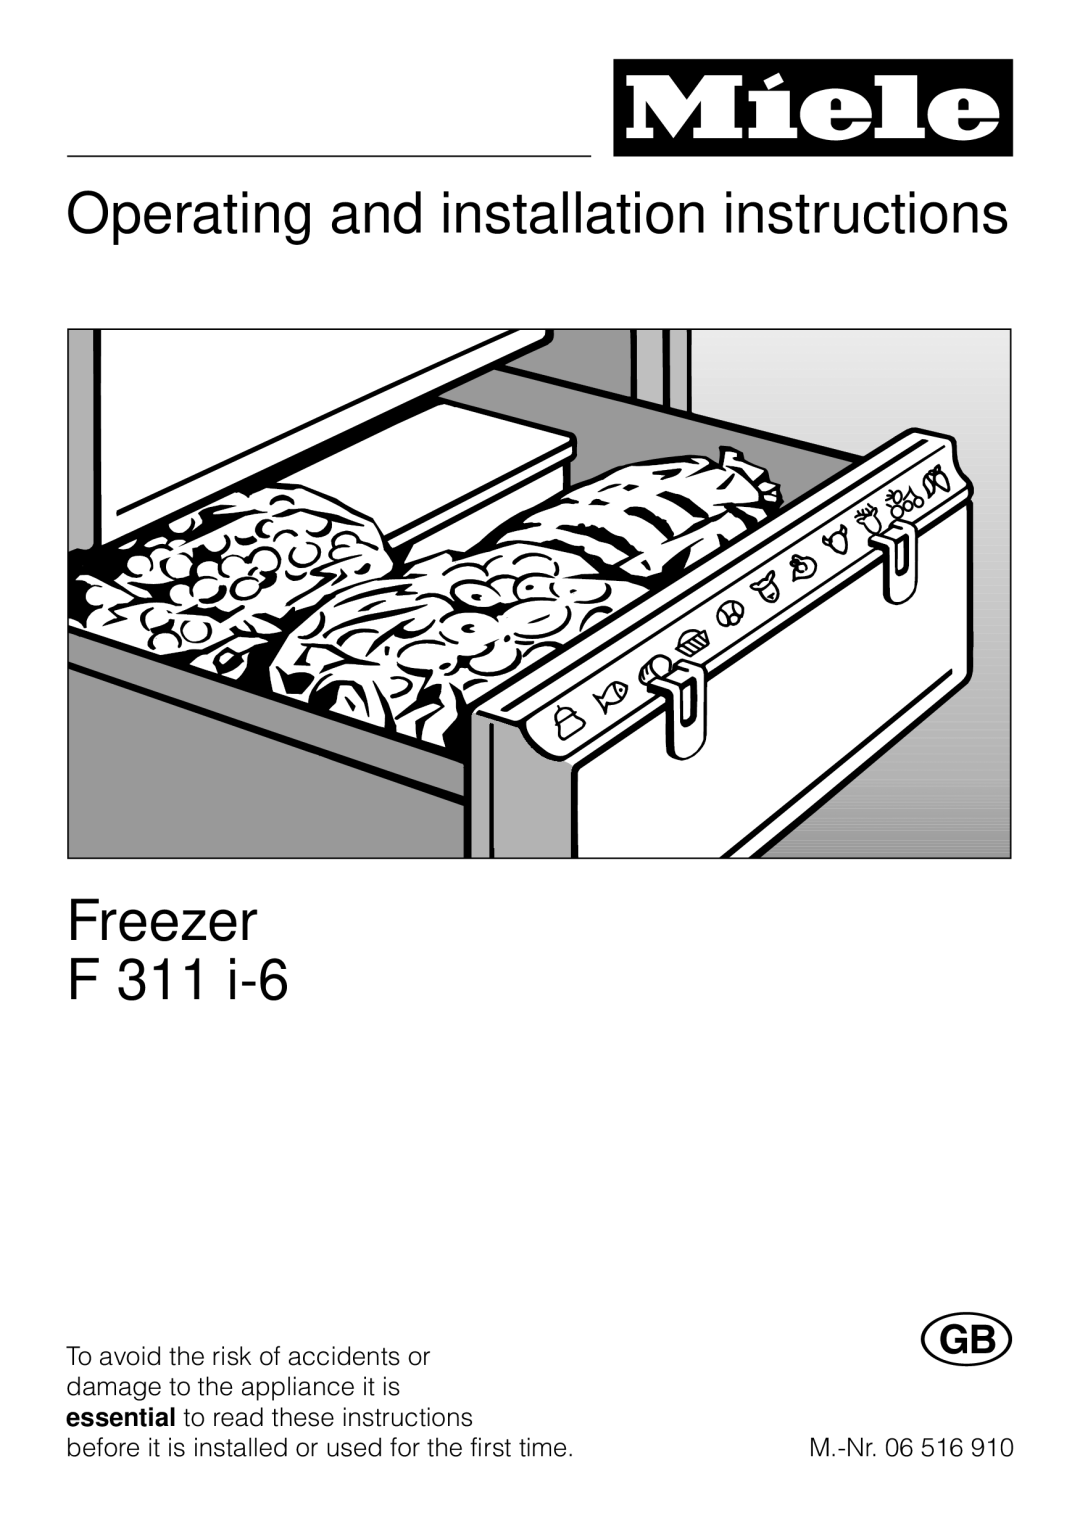 Miele F 311 i-6 installation instructions Operating and installation instructions, Freezer 